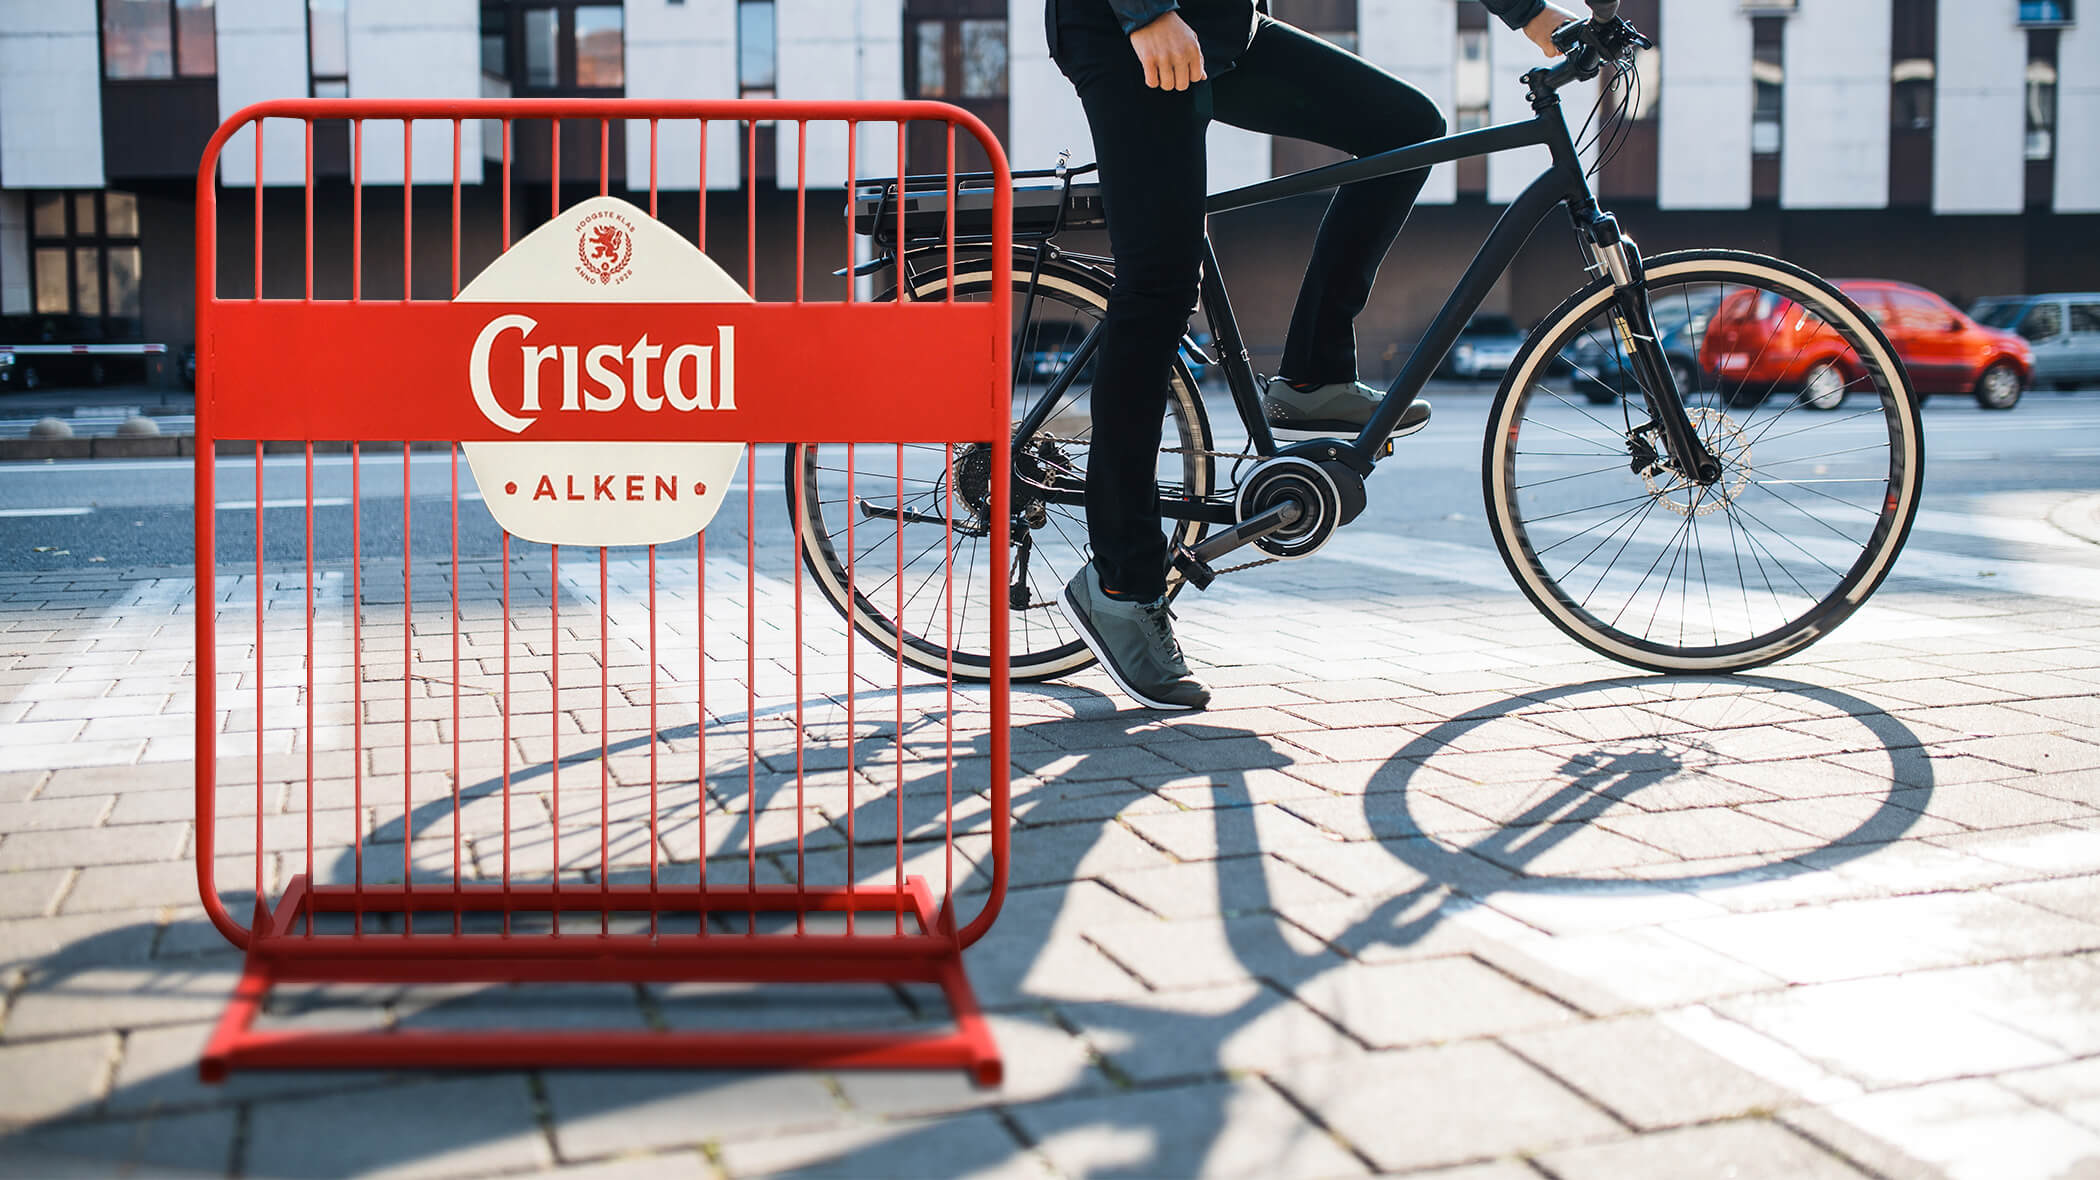 Cristal Cristal bike rack